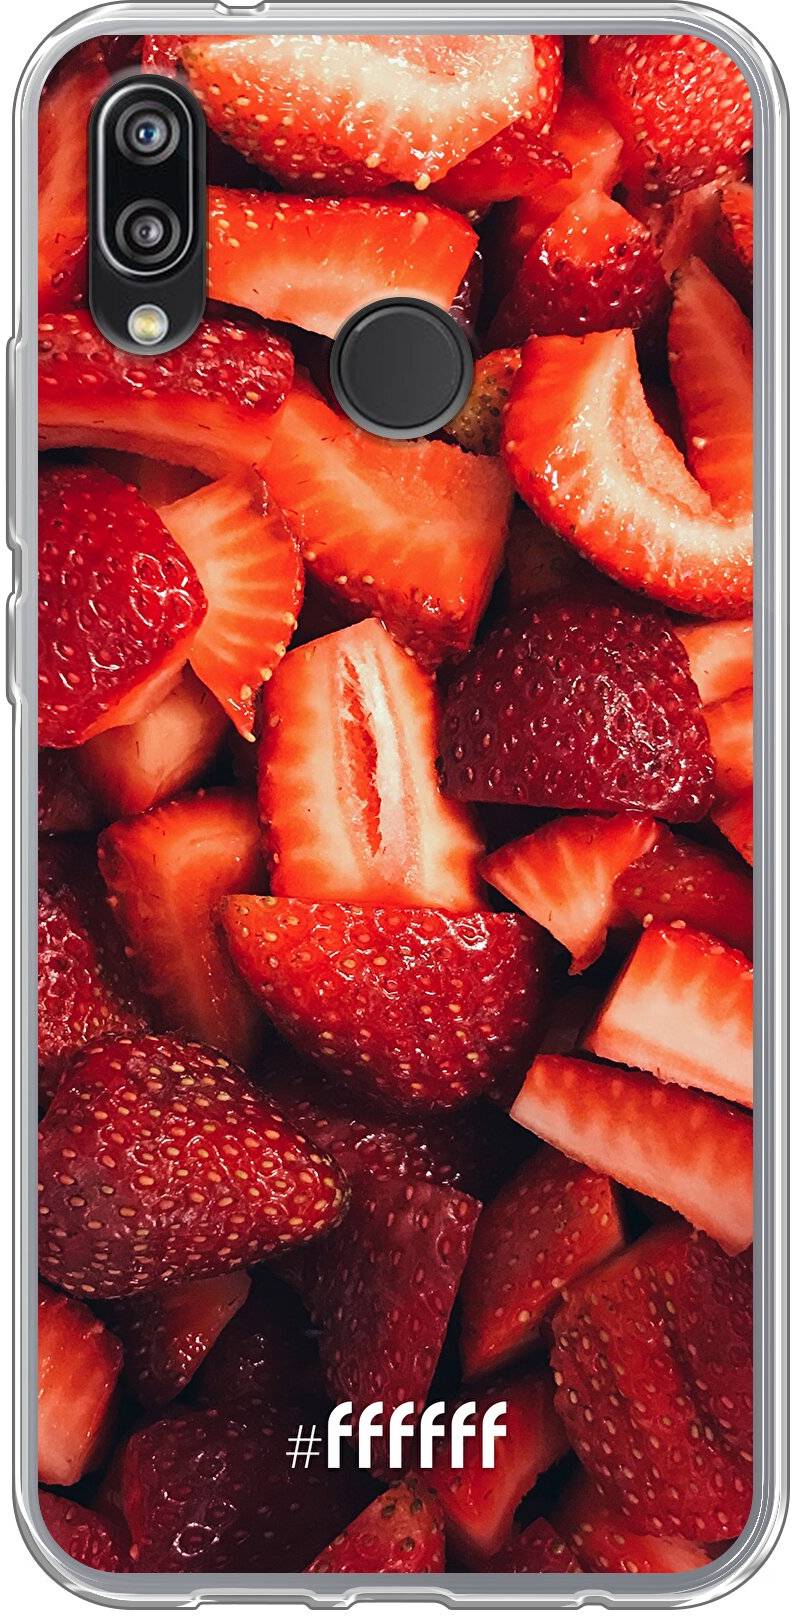 Strawberry Fields P20 Lite (2018)